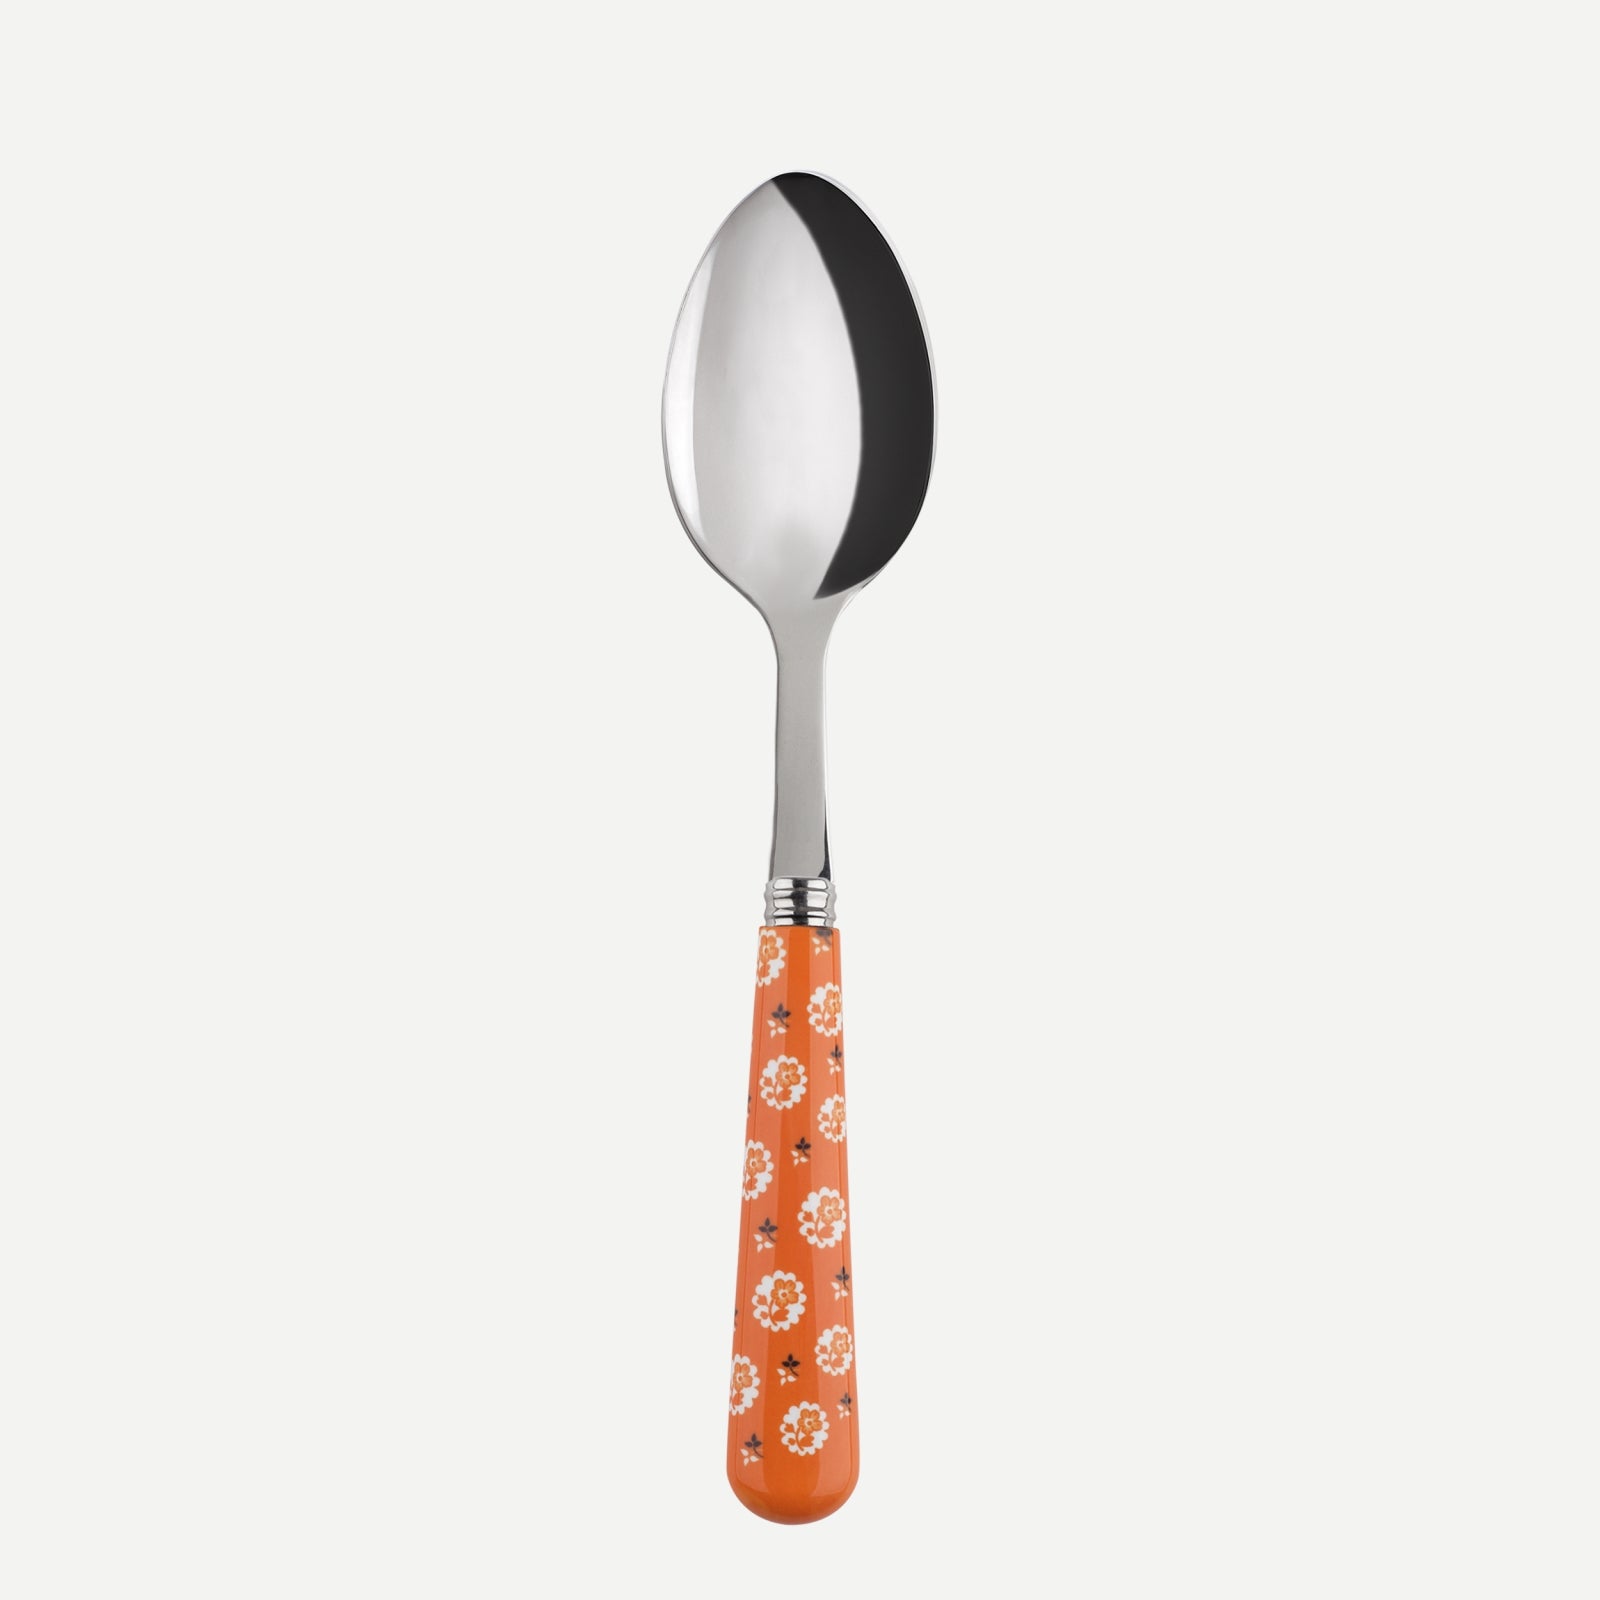 Cake spoon - Provencal - Orange